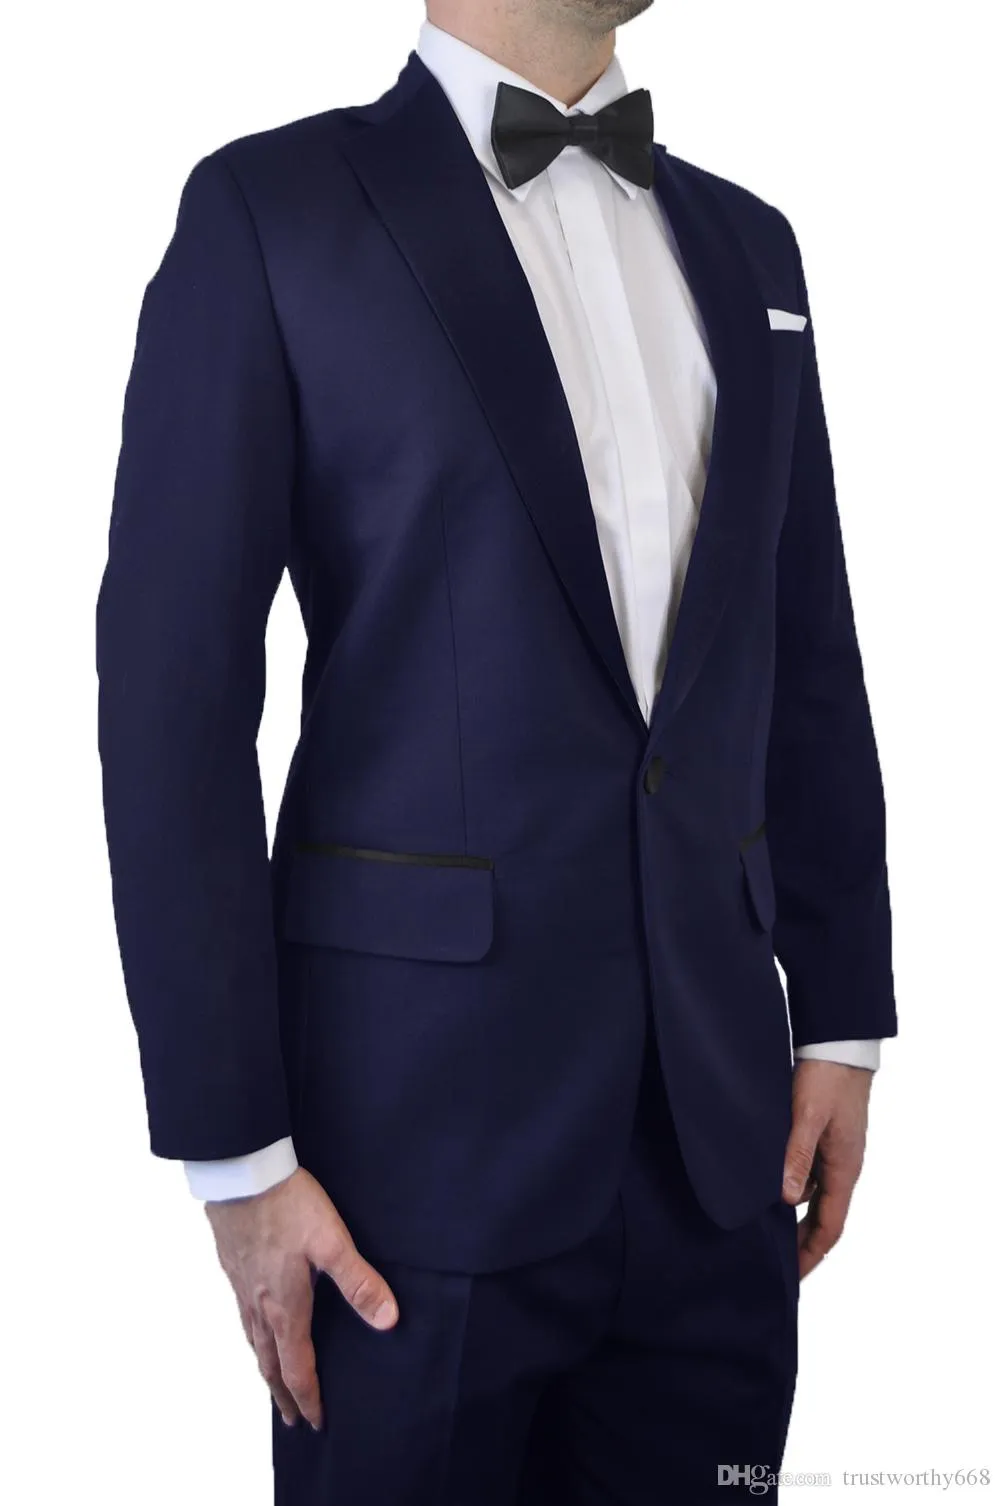 Populär One Button Groomsmen Peak Lapel Groom Tuxedos Män Passar Bröllop / Prom Best Man Blazer (Jacka + Pantst + Tie) 952